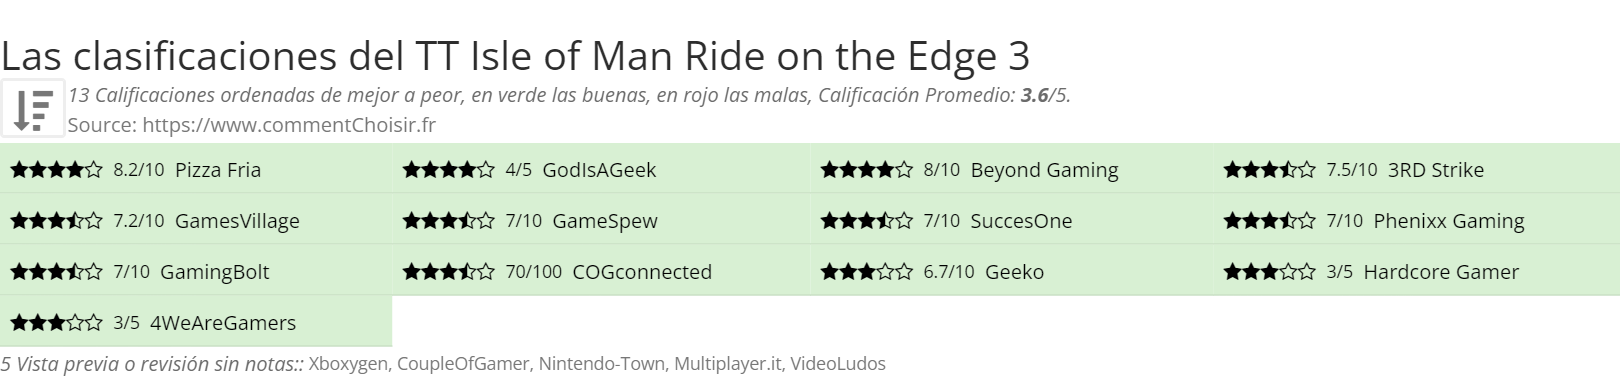 Ratings TT Isle of Man Ride on the Edge 3